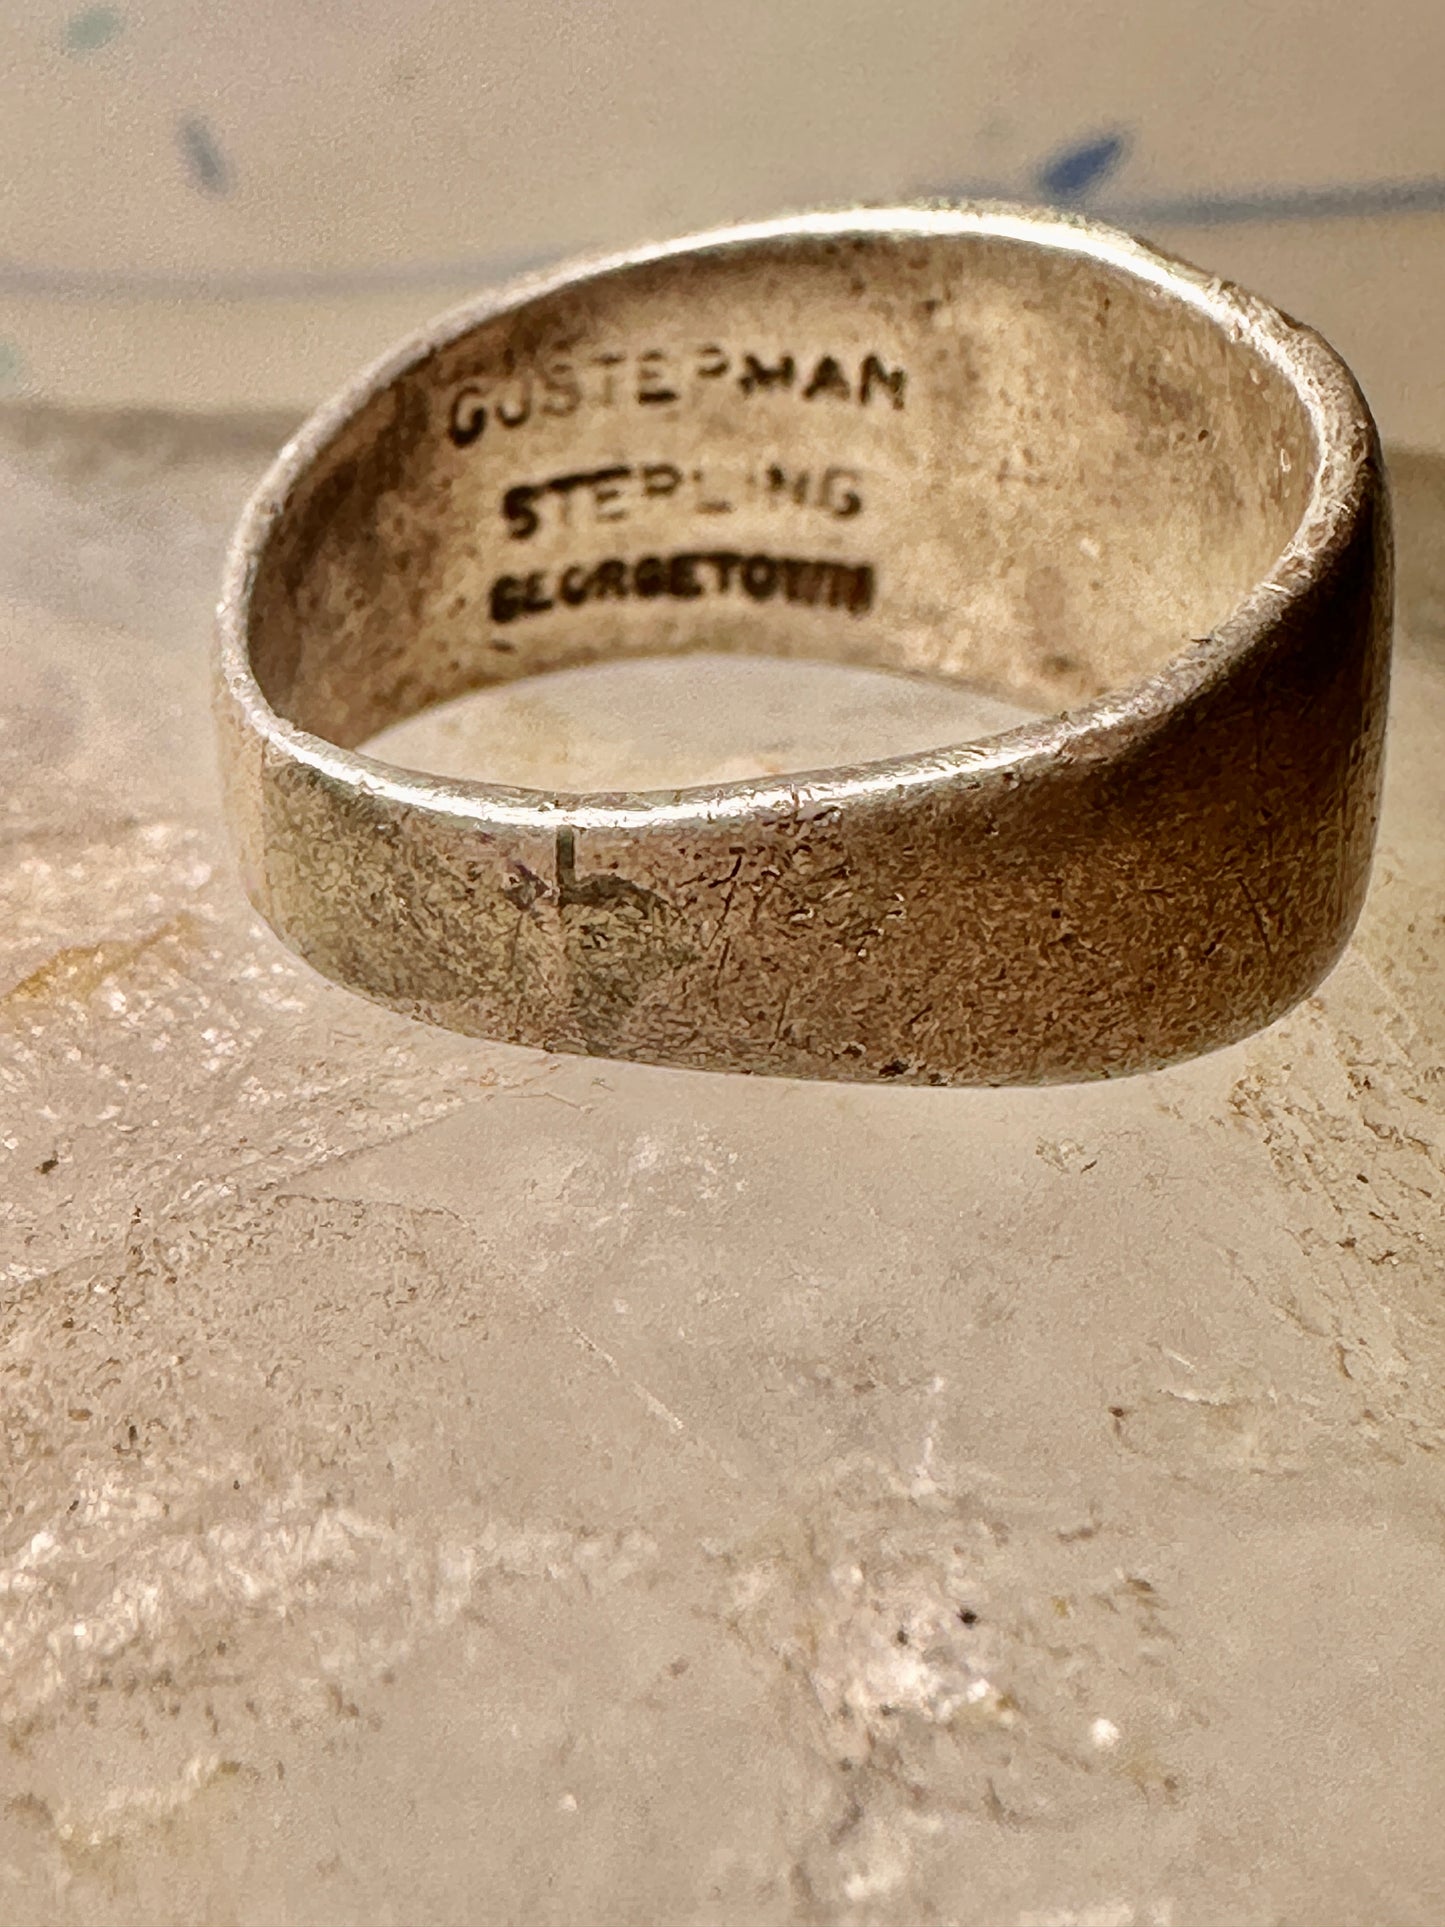 Gusterman ring size 6 Cross Religious sterling silver women men Georgetown